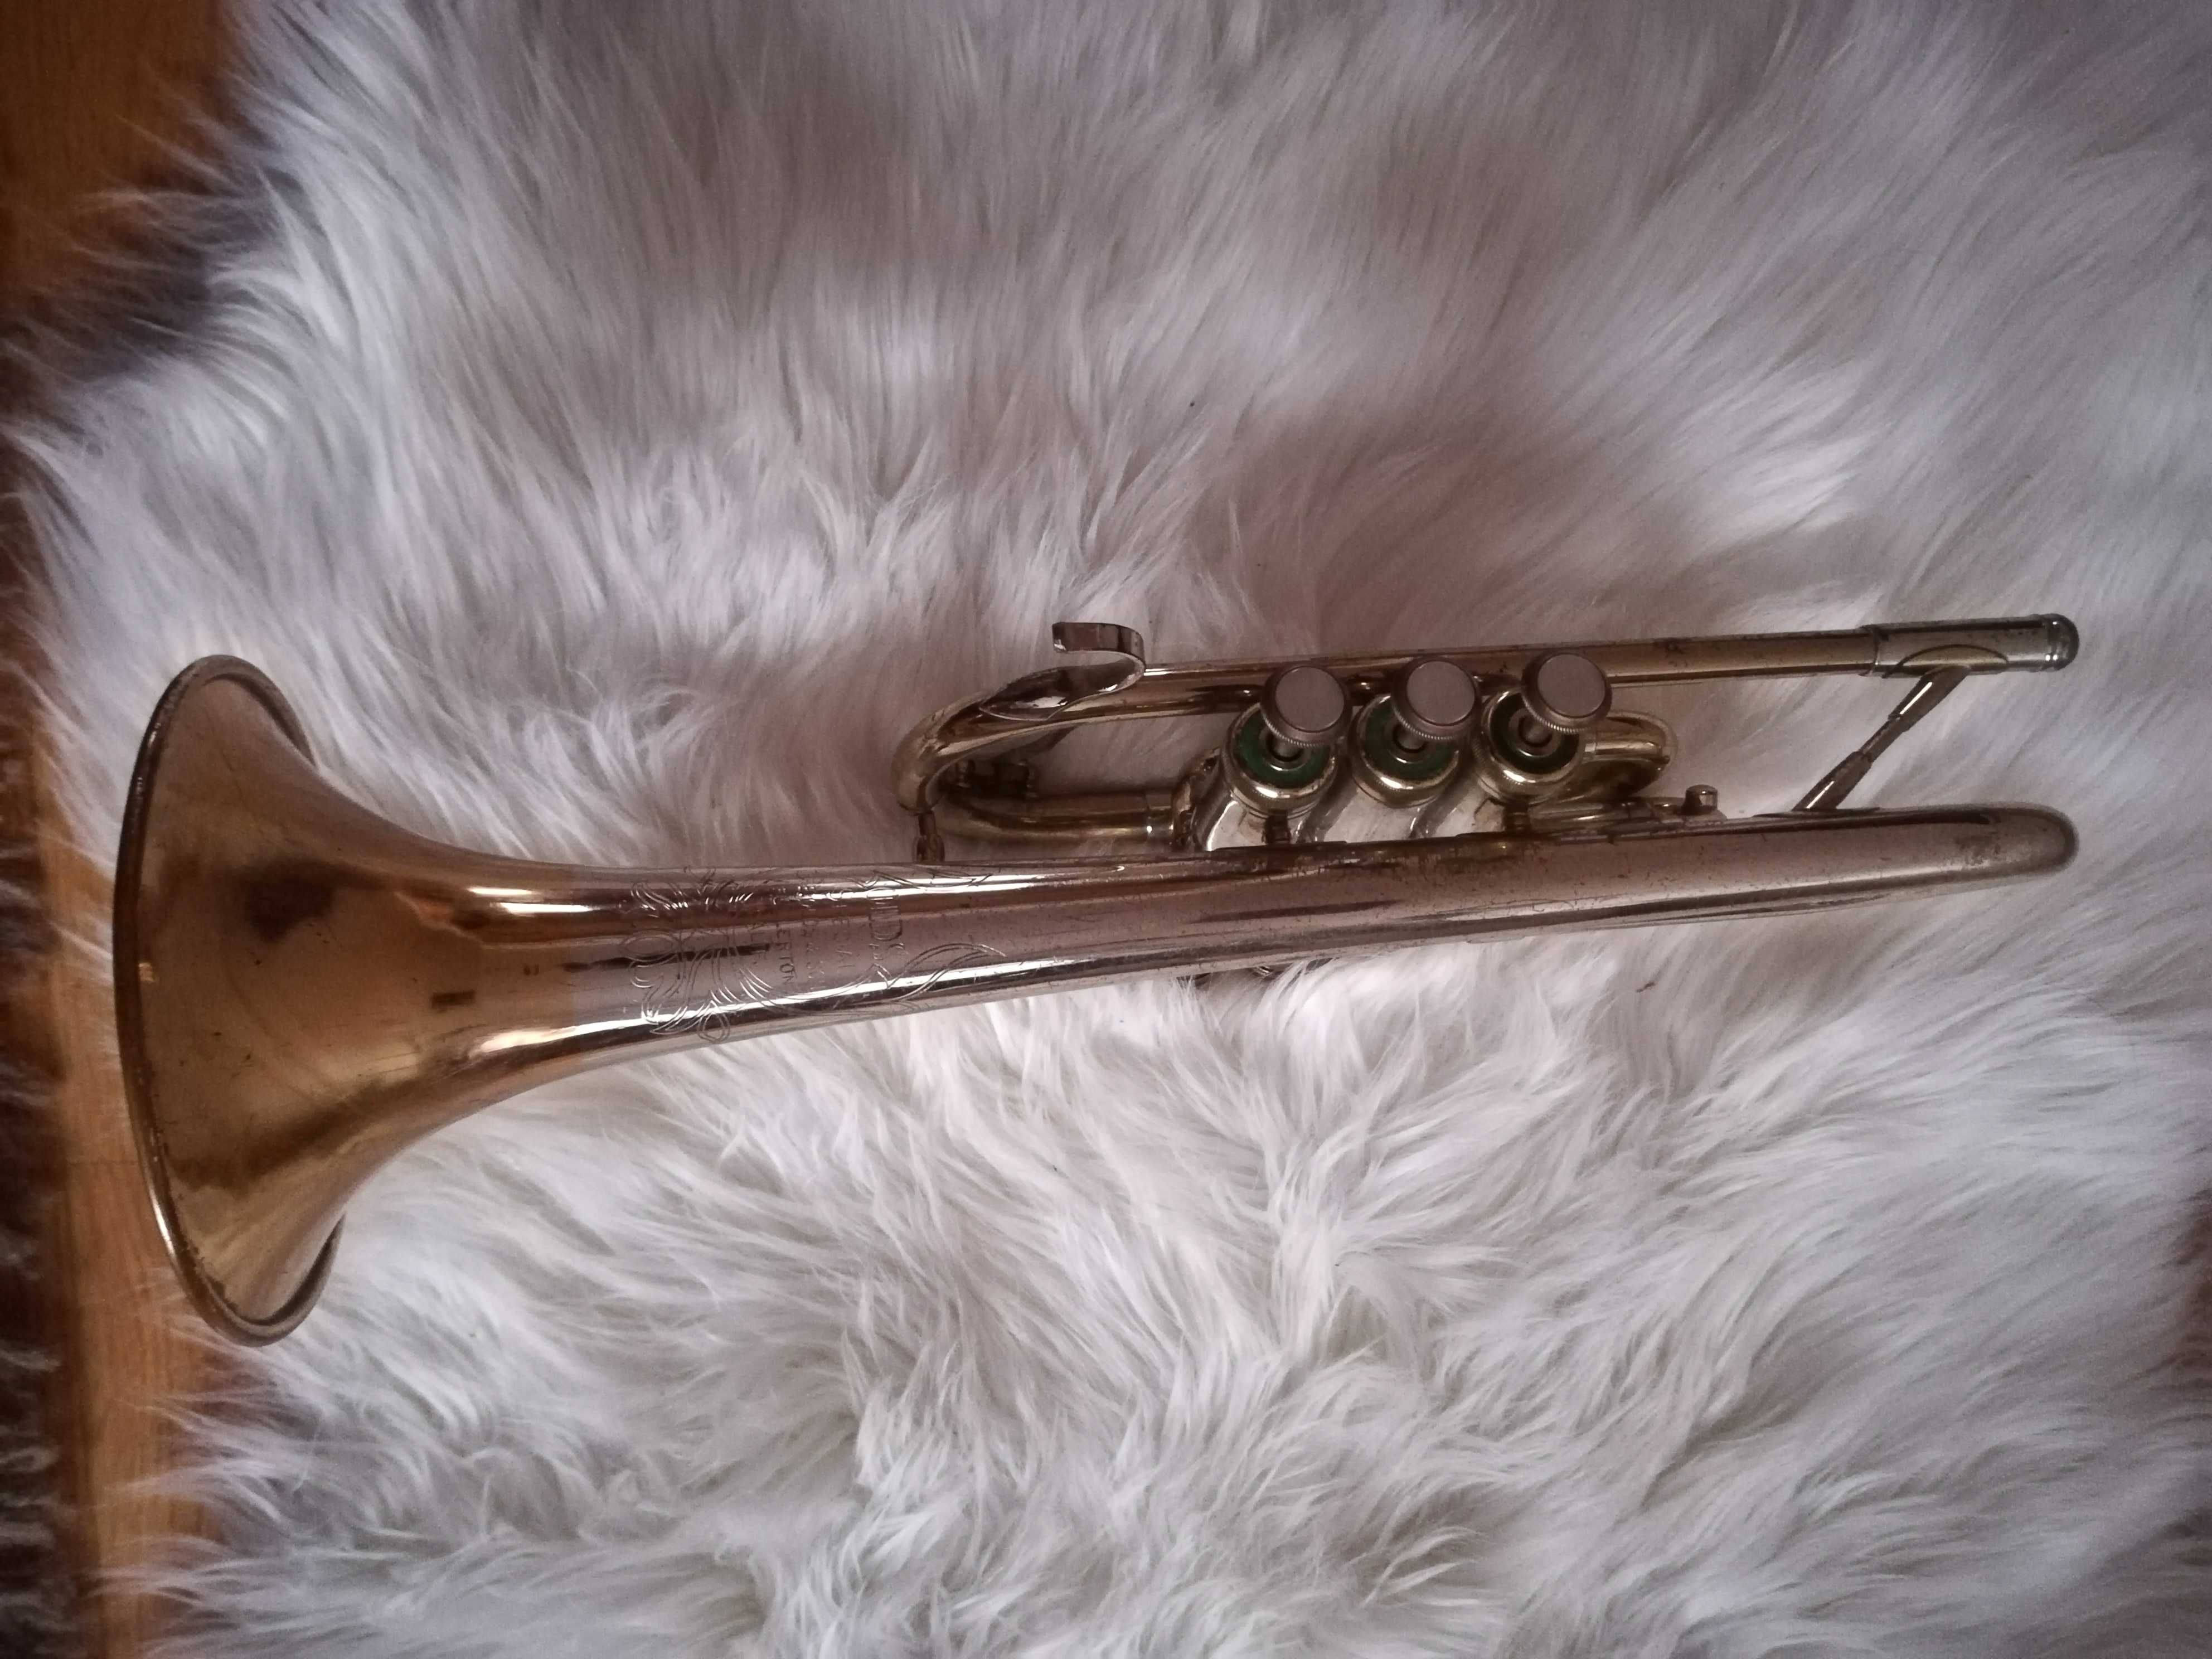 Trąbka F.E.OLDS spacjal Fullerton California-Trumpet cornet